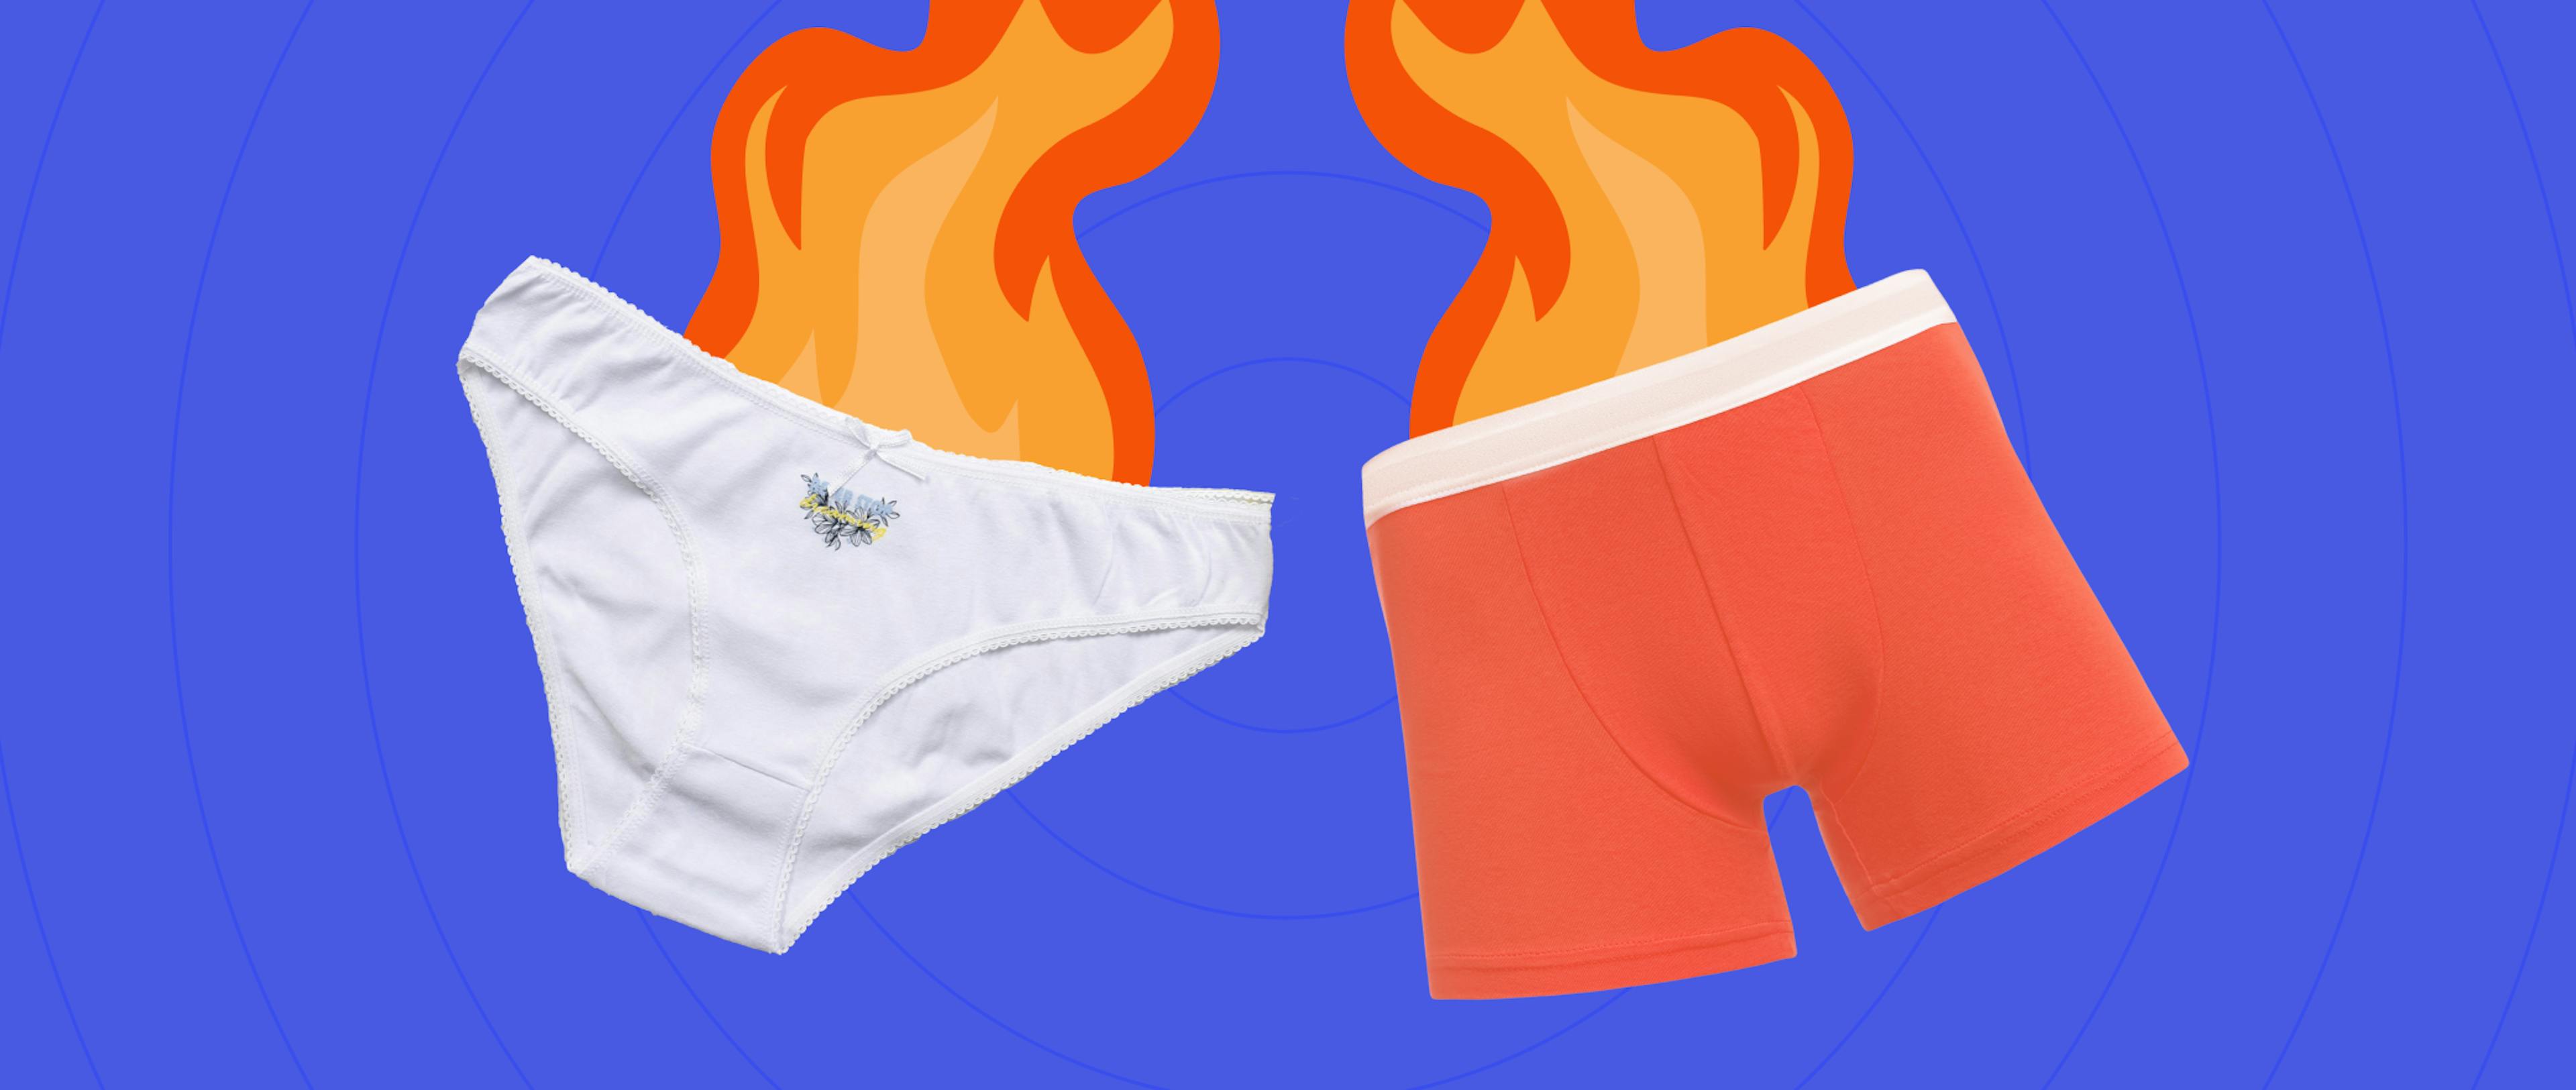 Burning underwear